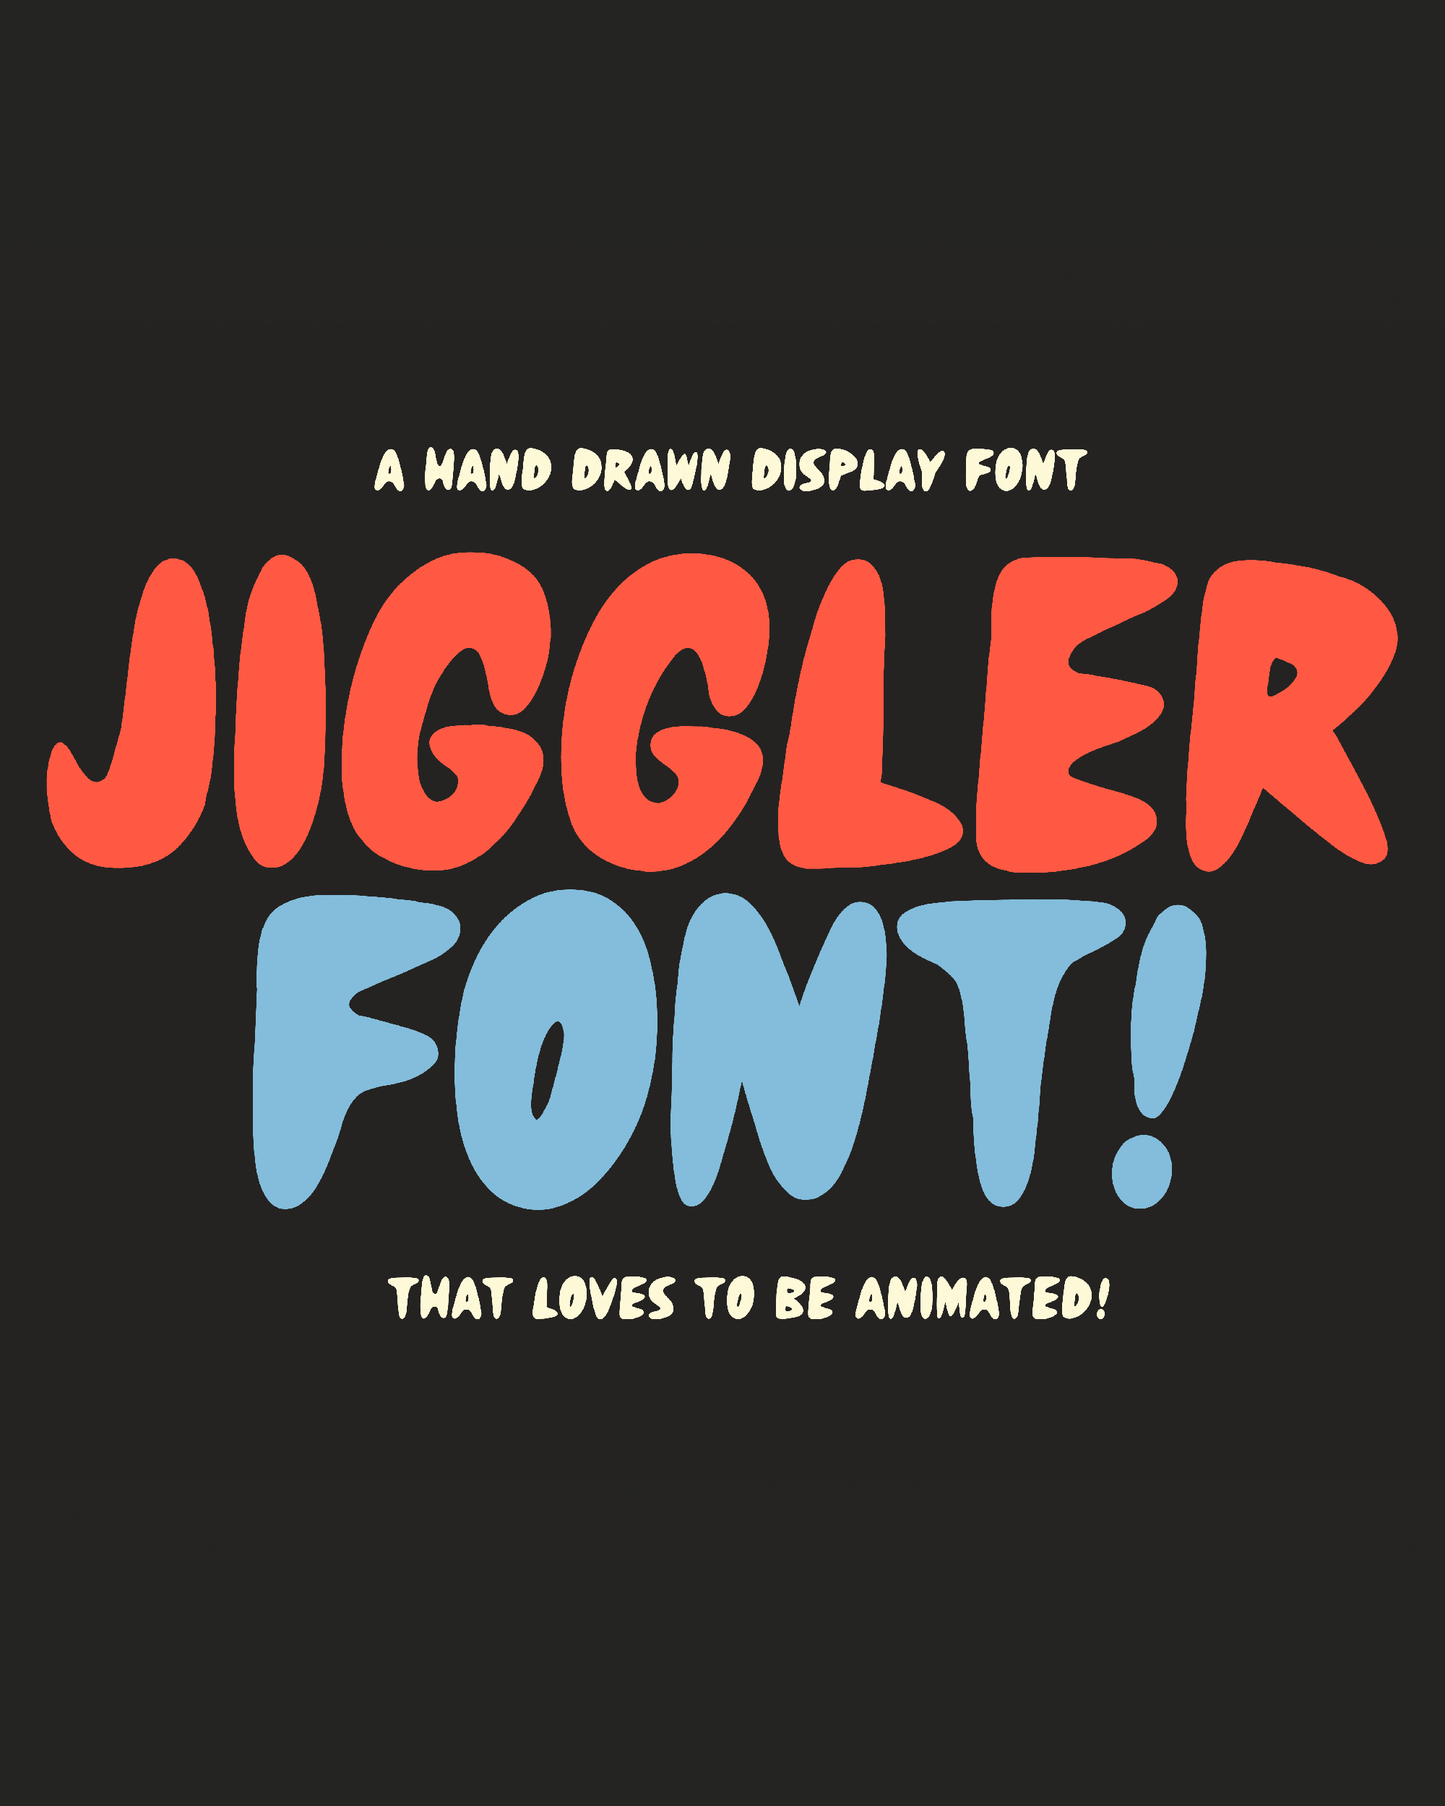 Jiggler Font by Chris Piascik